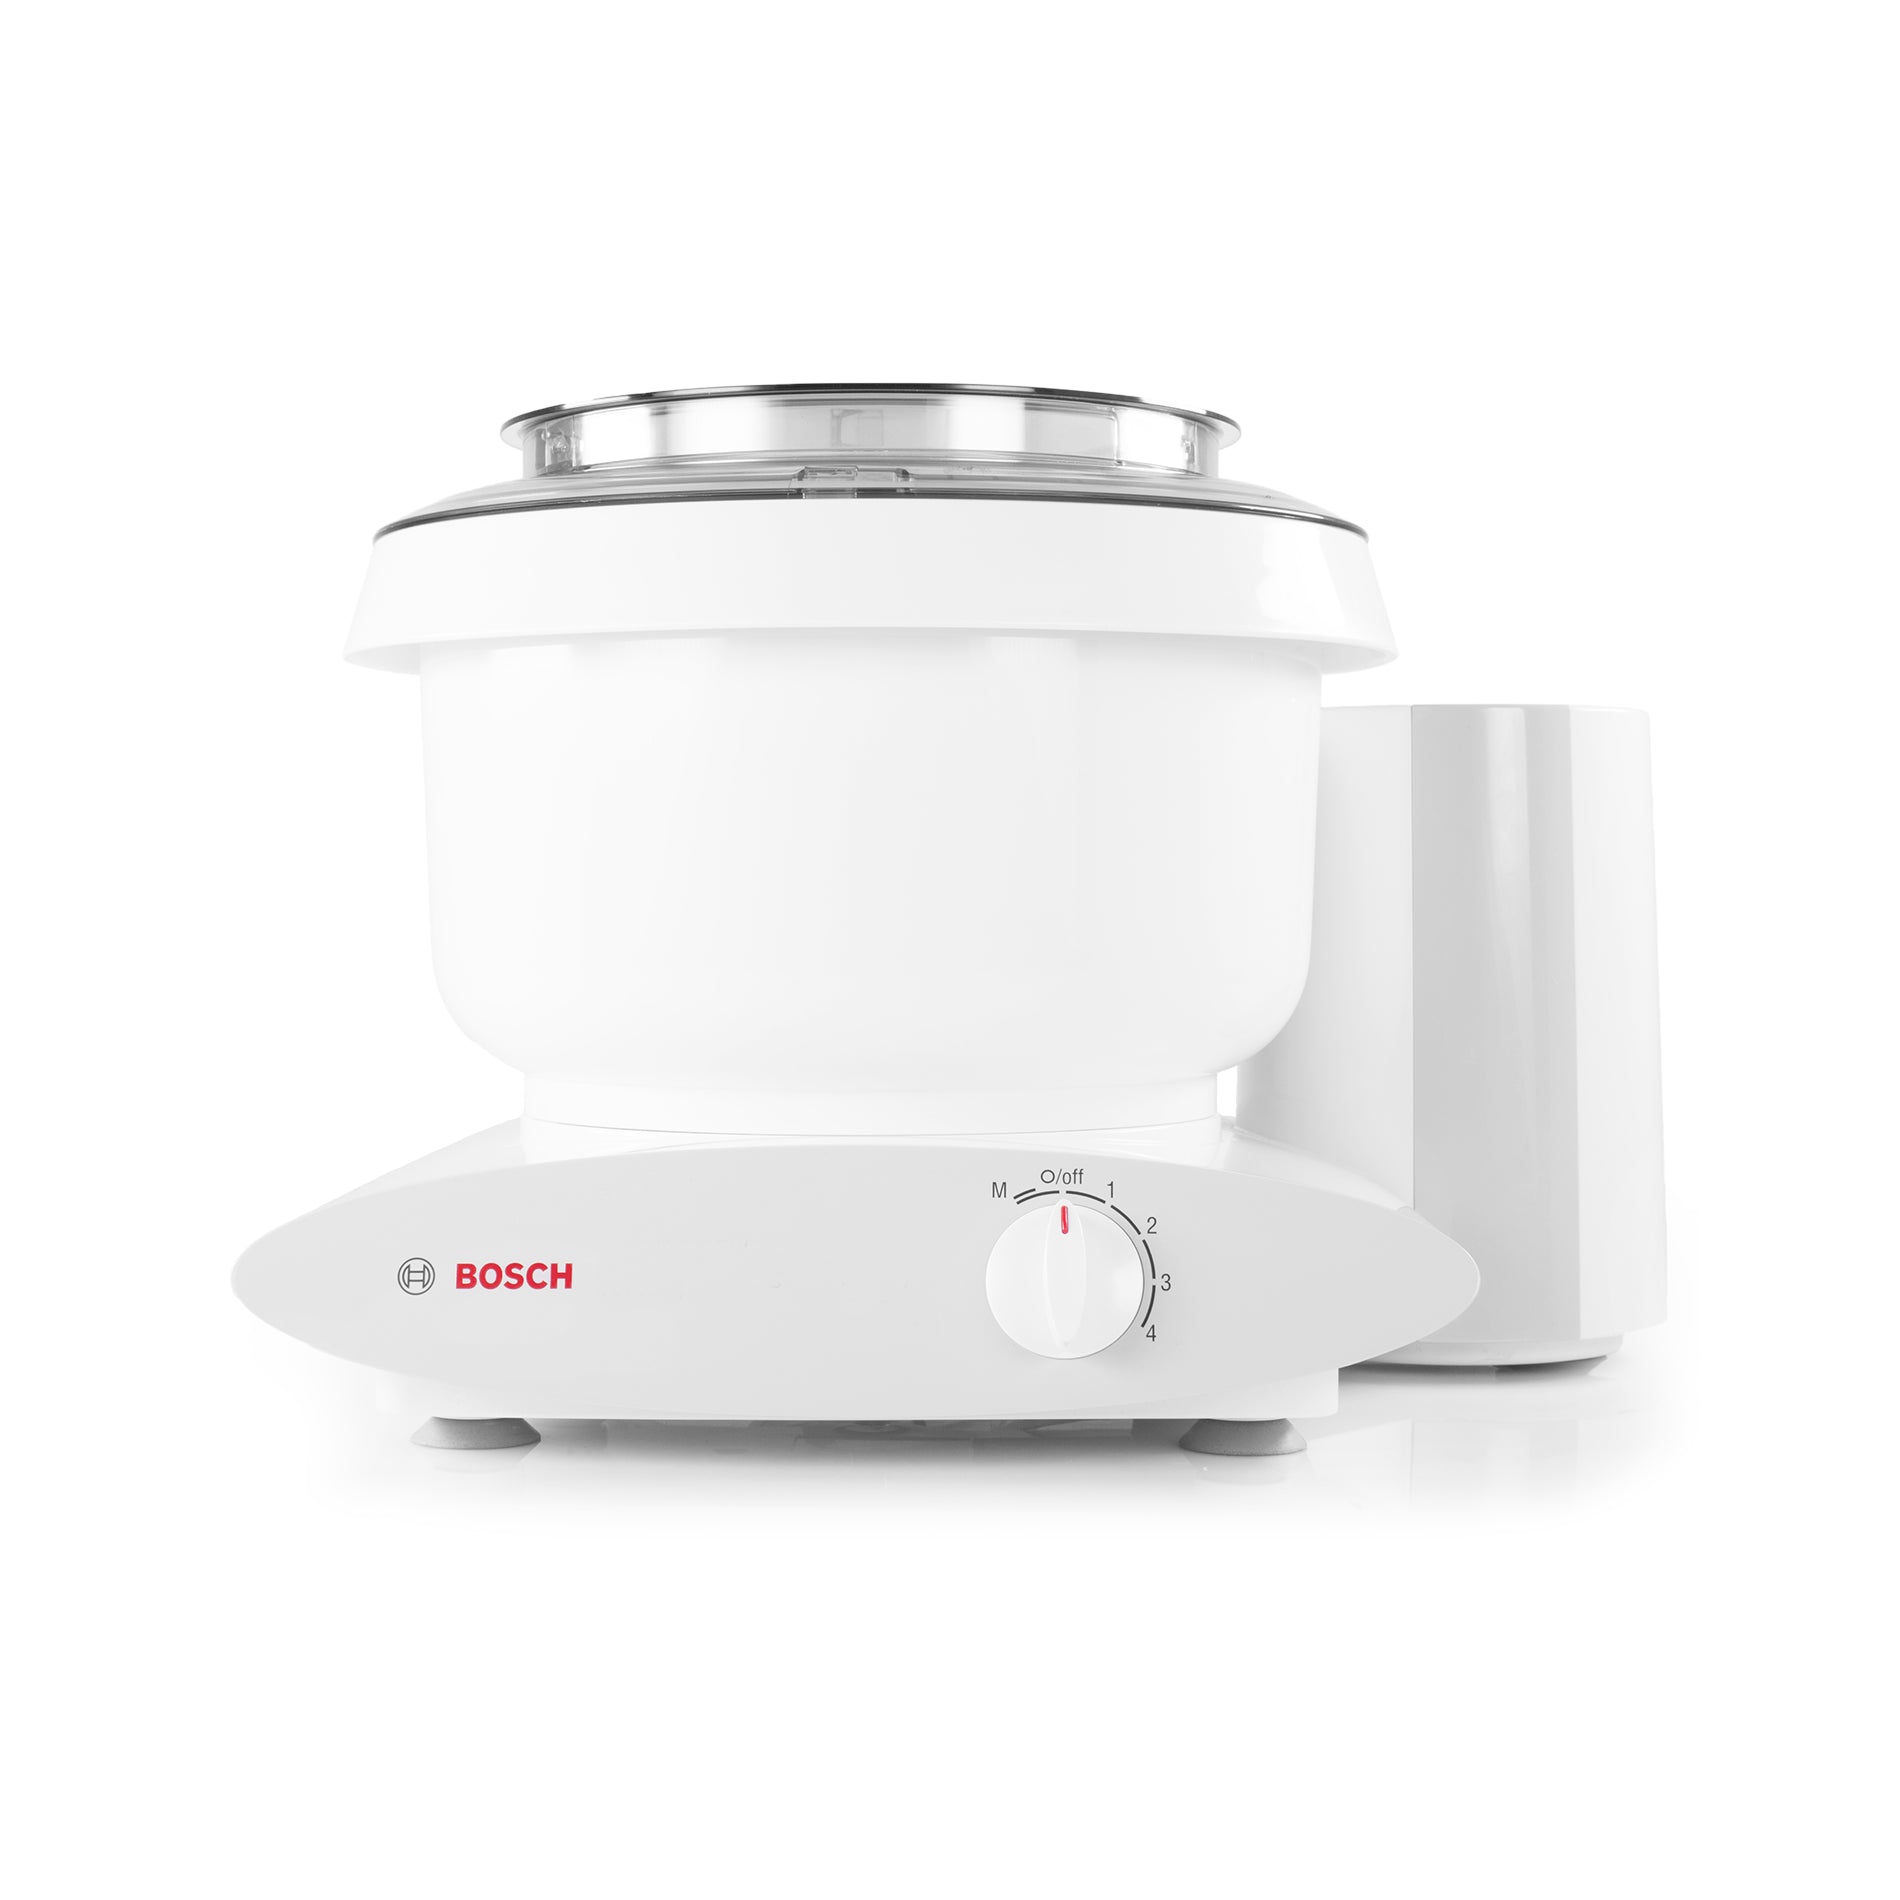 Bosch Universal Plus Mixer in White - Deluxe Bundle